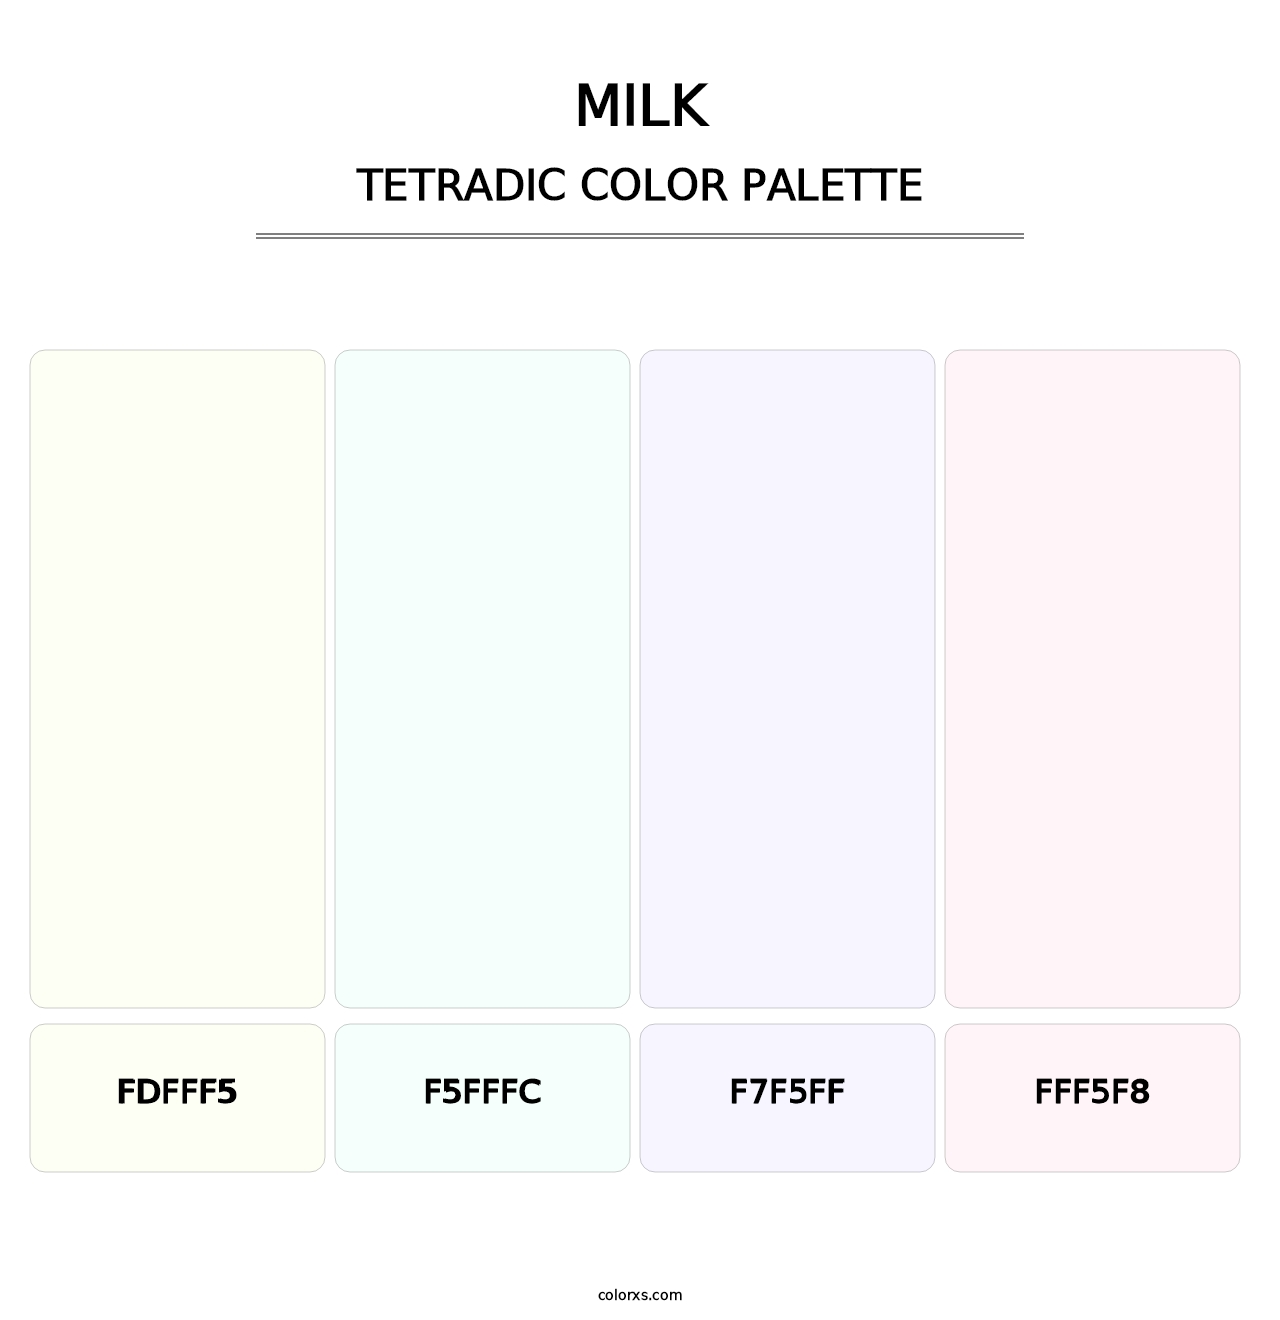 Milk - Tetradic Color Palette